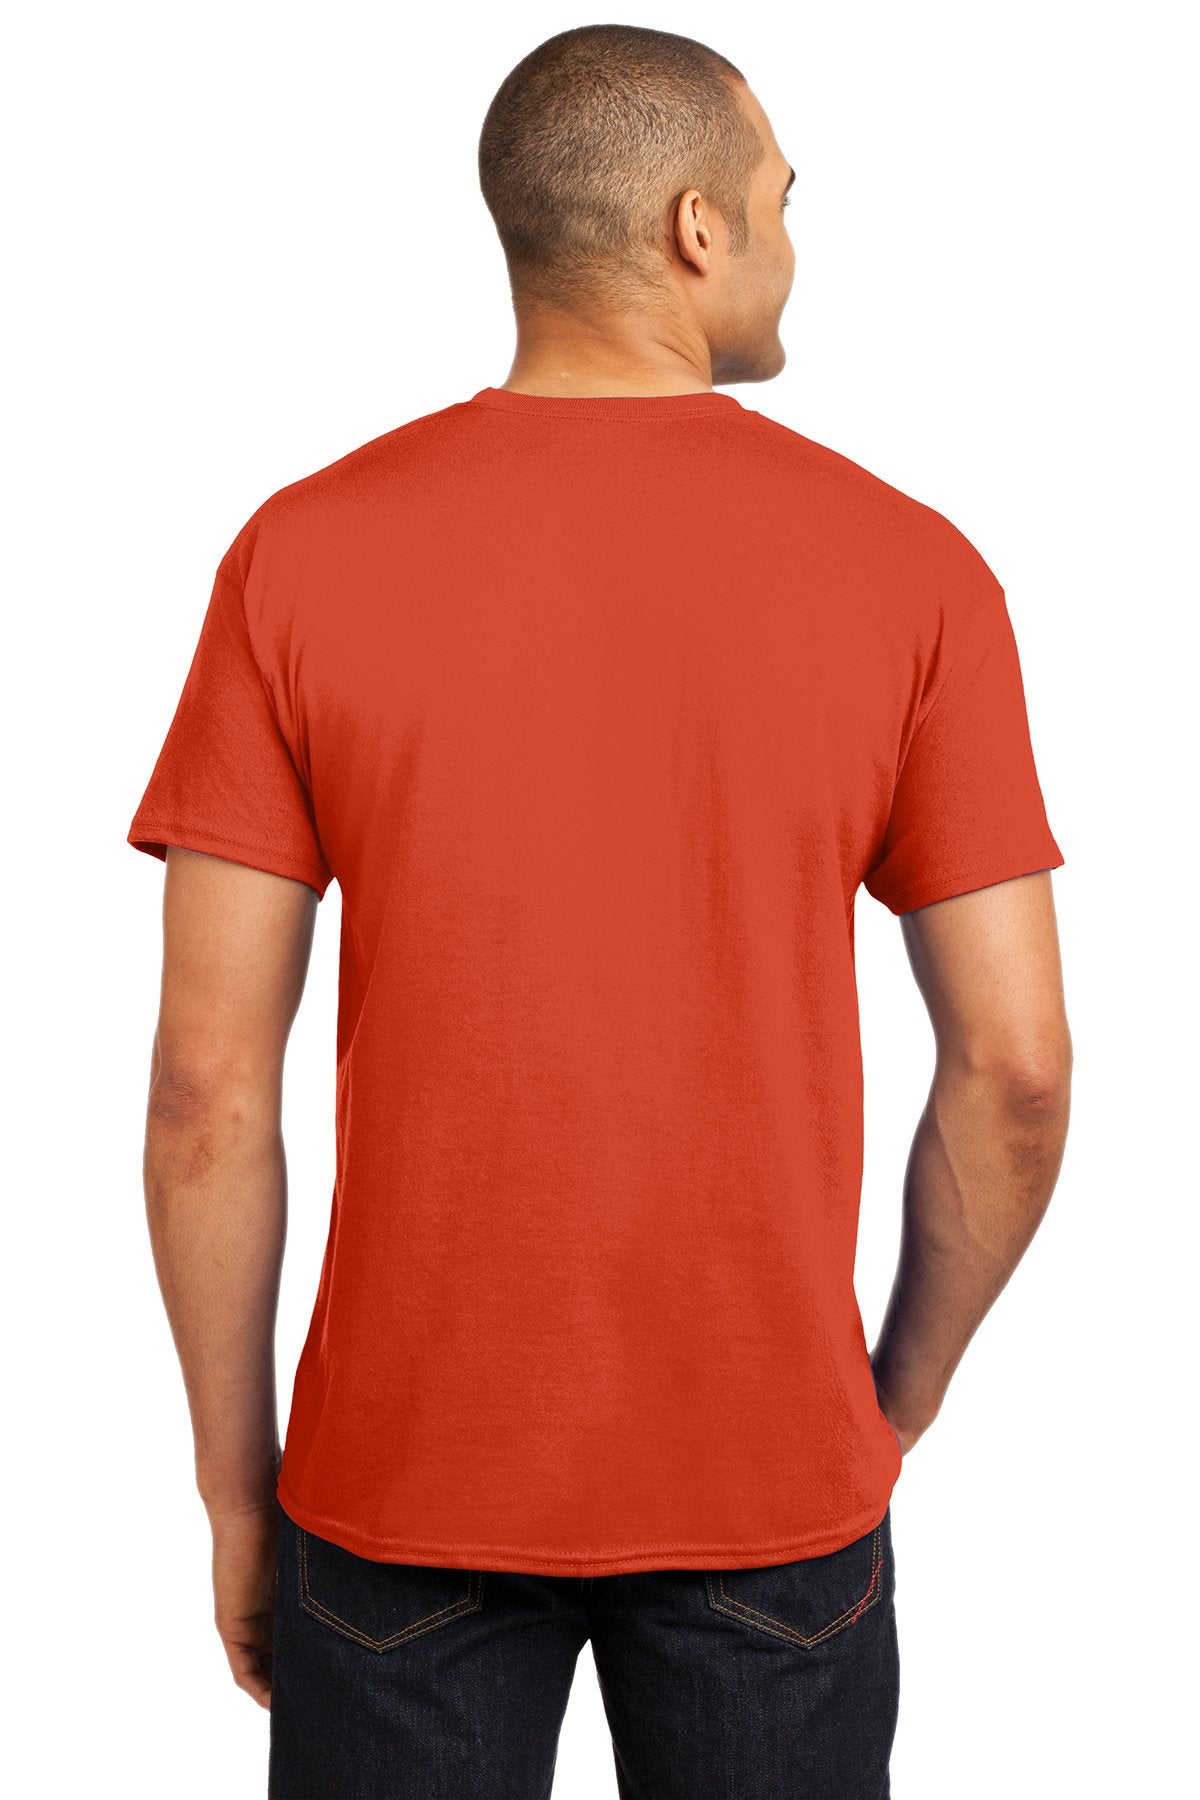 hanes ecosmart 50 50 cotton/poly t shirt 5170 orange